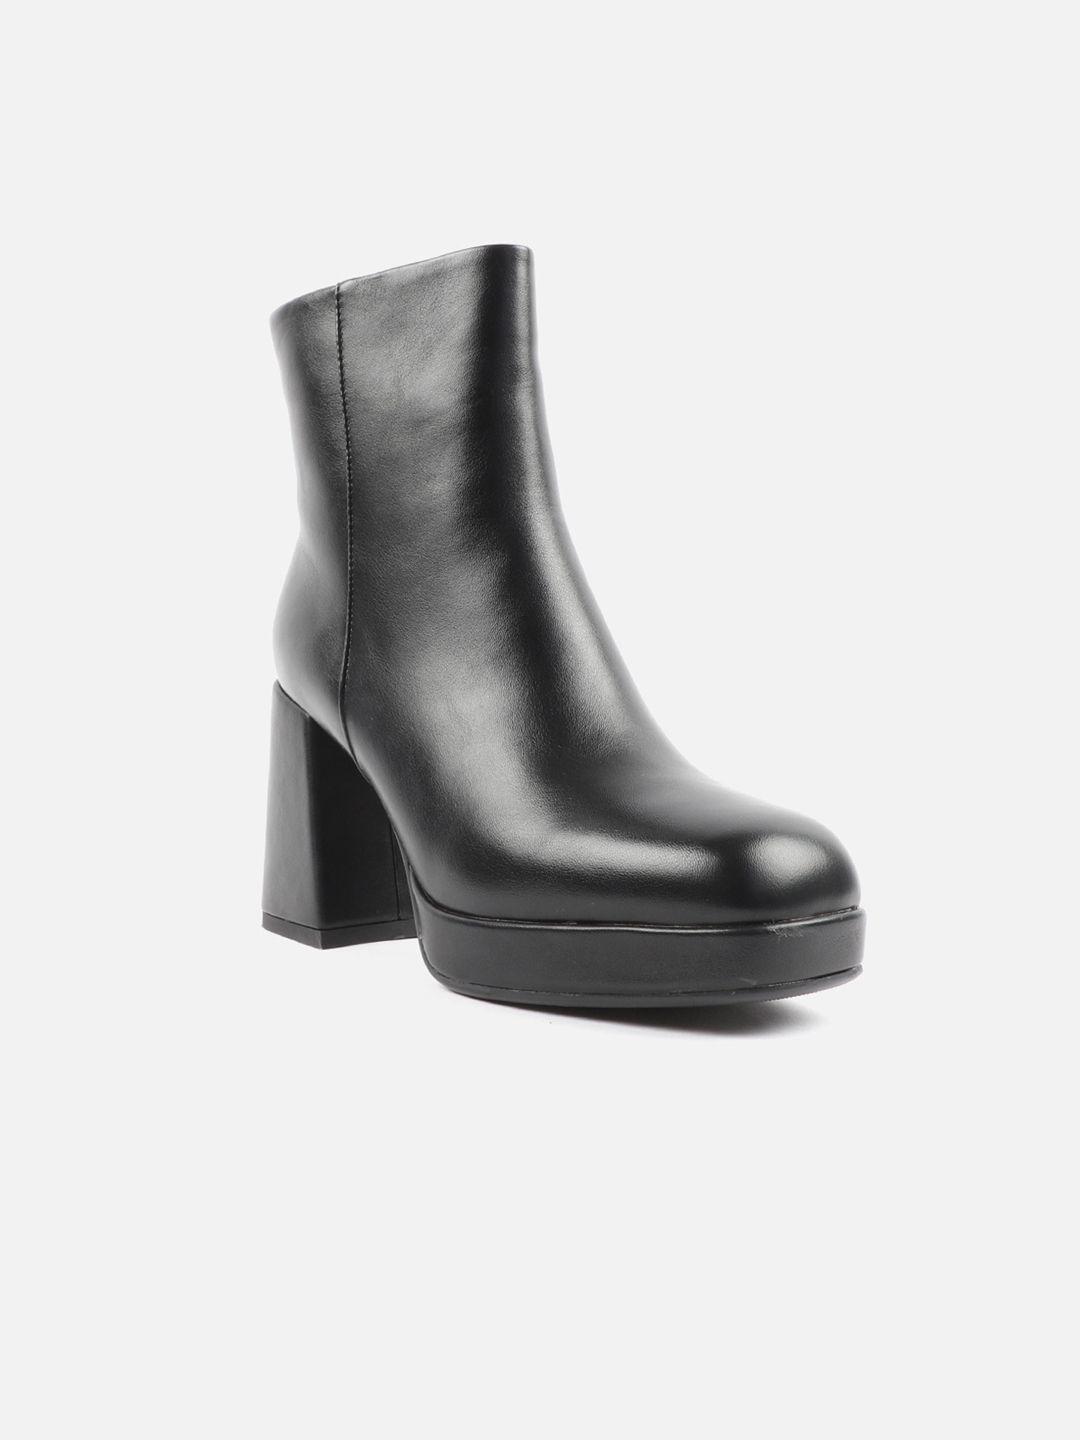 carlton-london-women-black-mid-top-block-heeled-boots